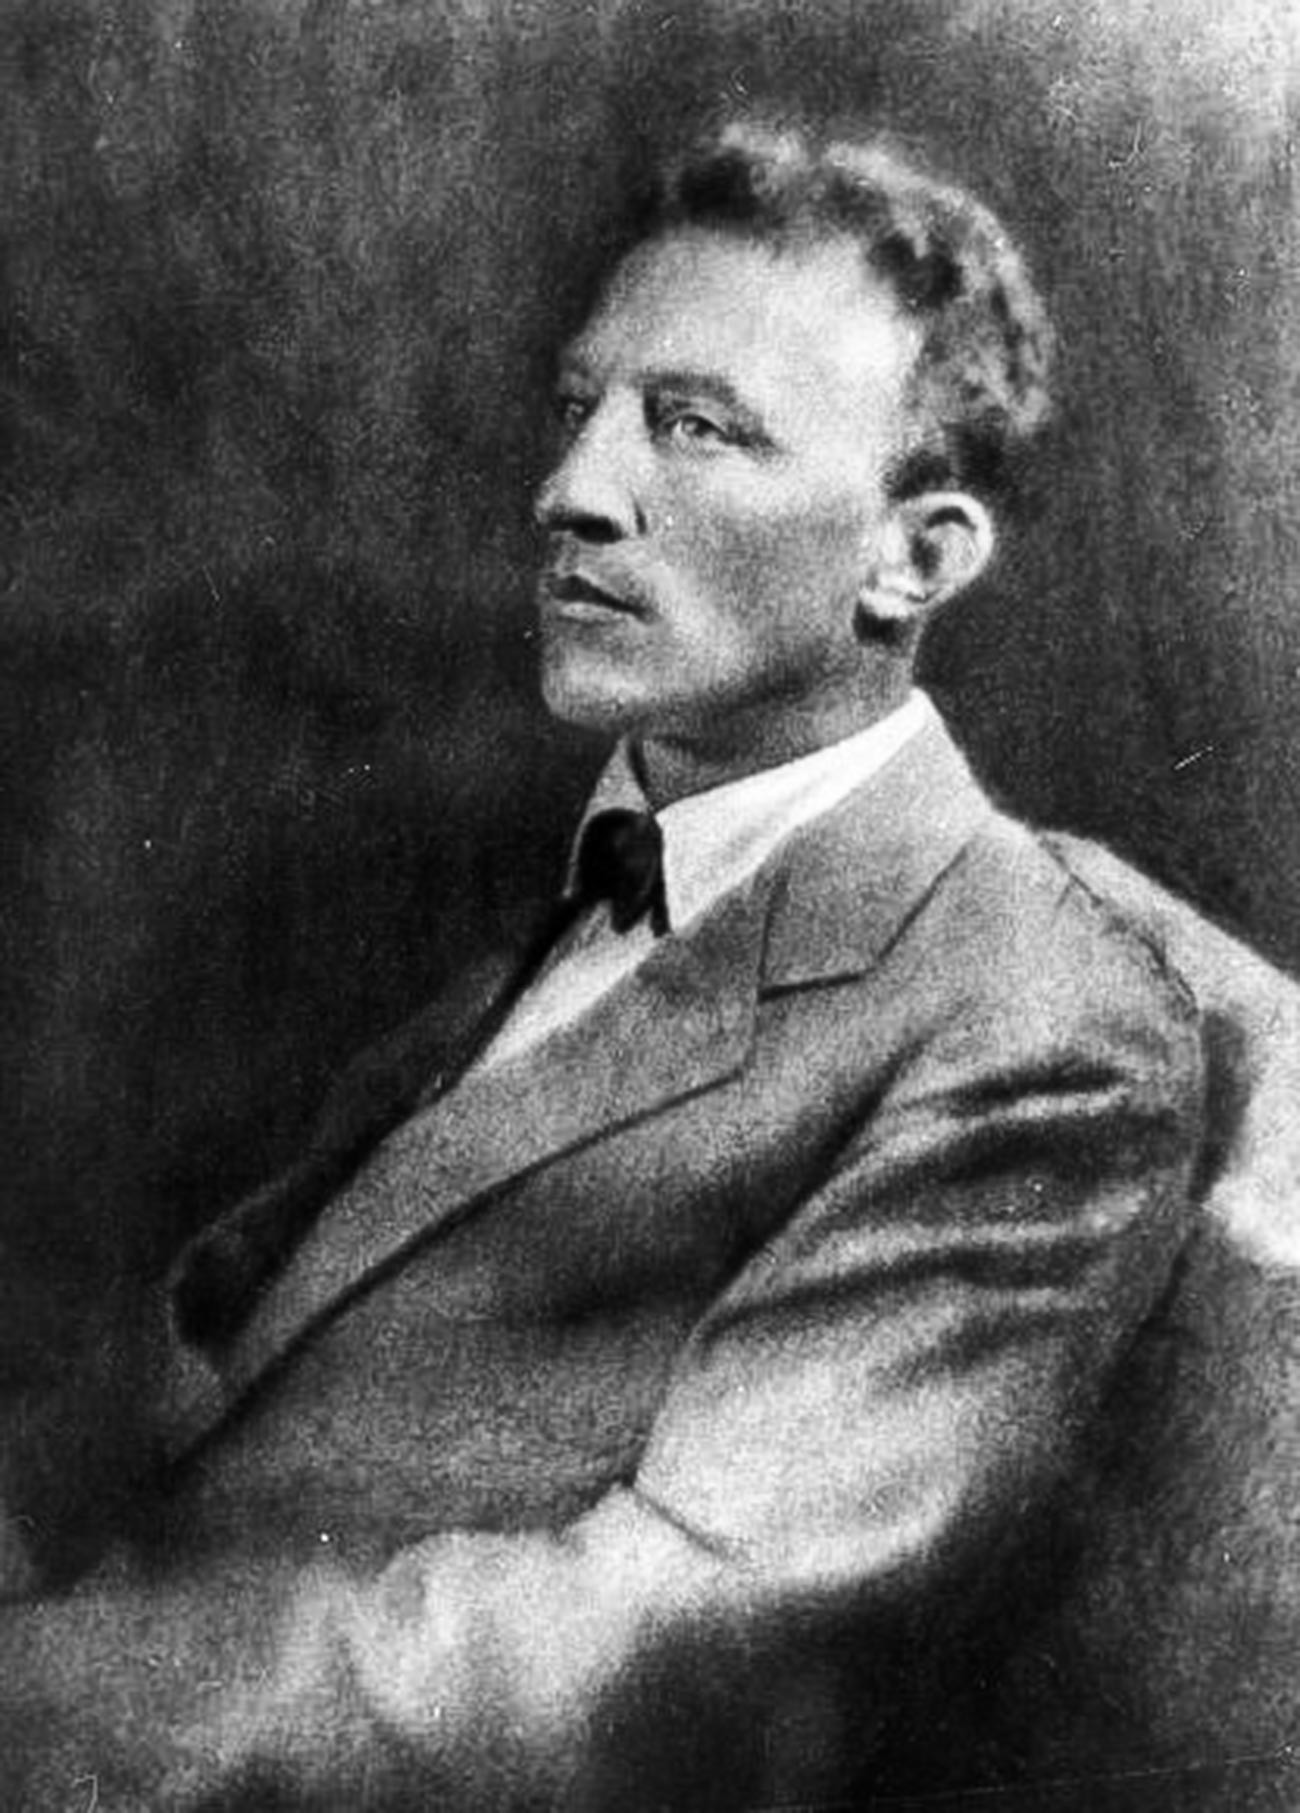 Silver-age poet Alexander Blok, 1920